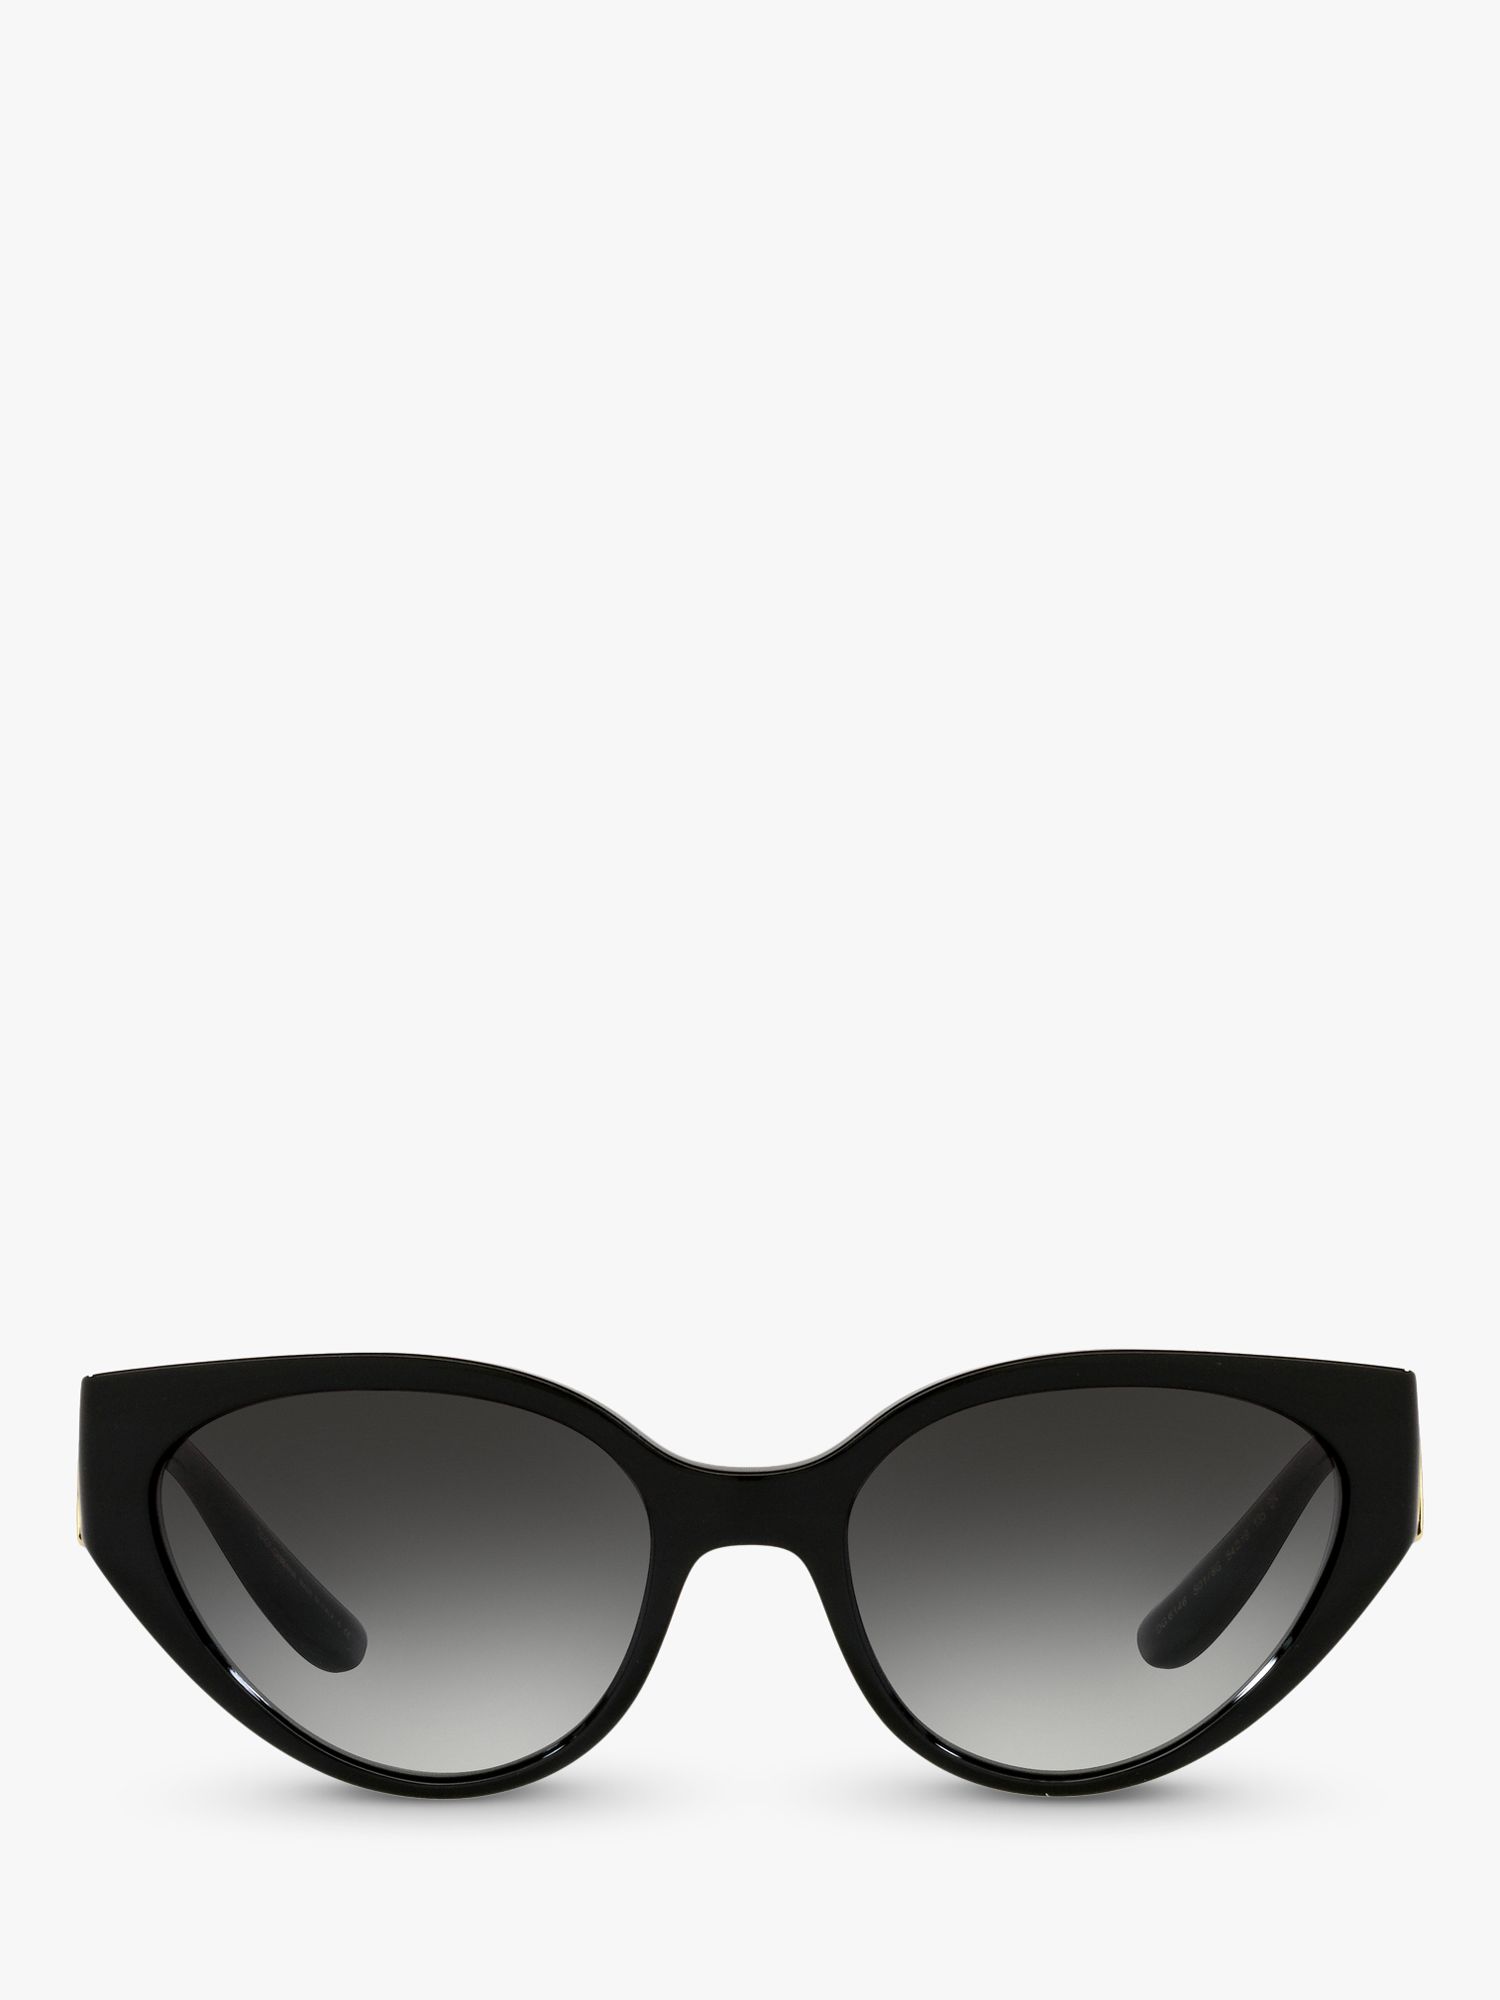 Dolce & Gabbana DG6146 Women's Cat's Eye Sunglasses, Black/Grey ...